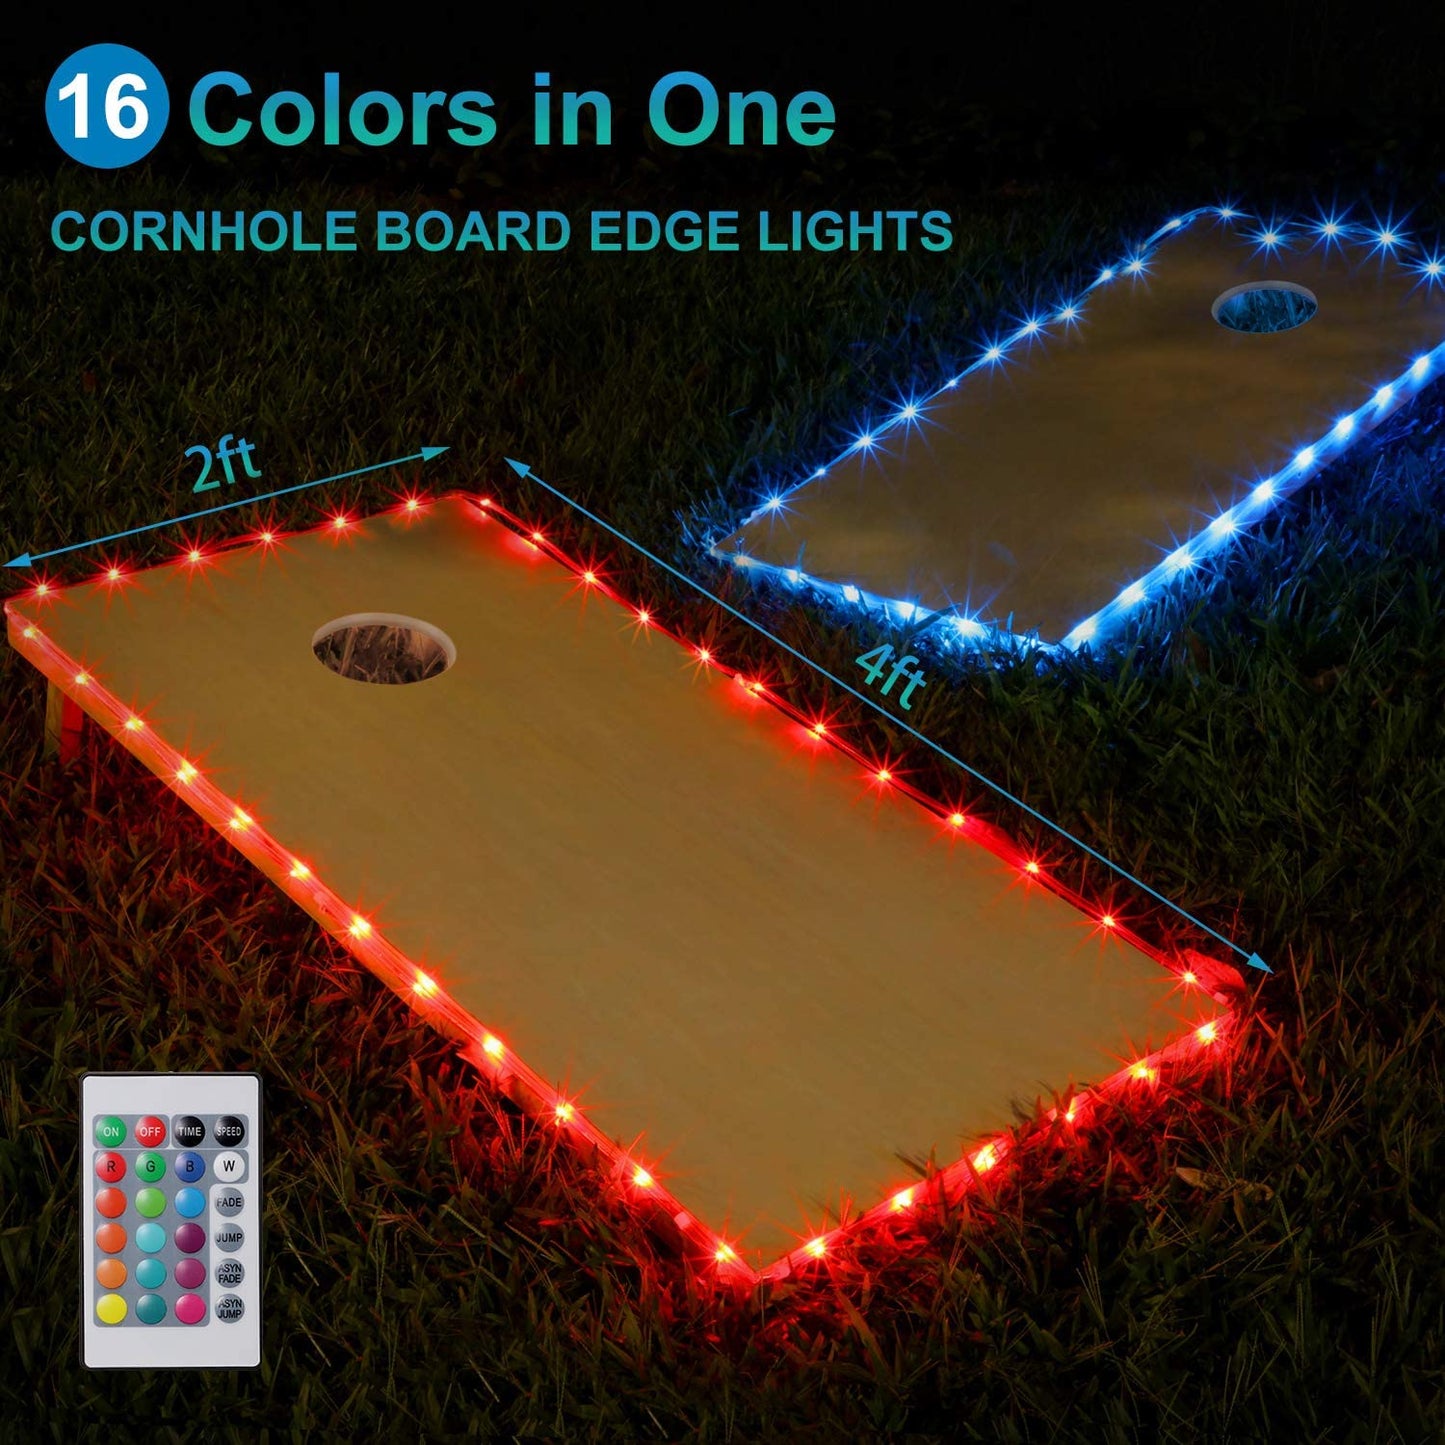 cornhole board edge lights in use